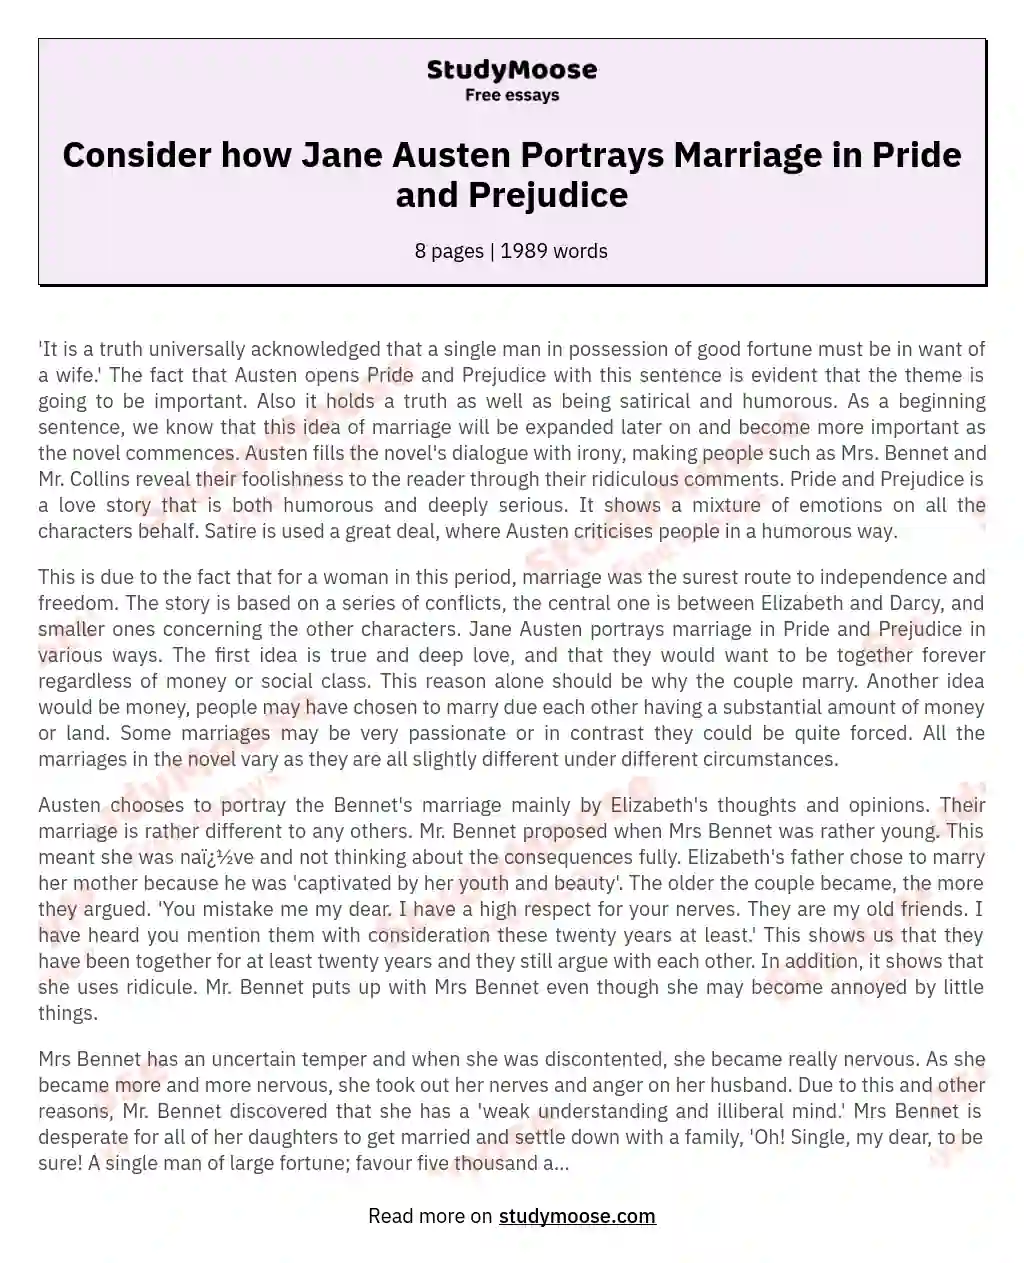 Consider how Jane Austen Portrays Marriage in Pride and Prejudice